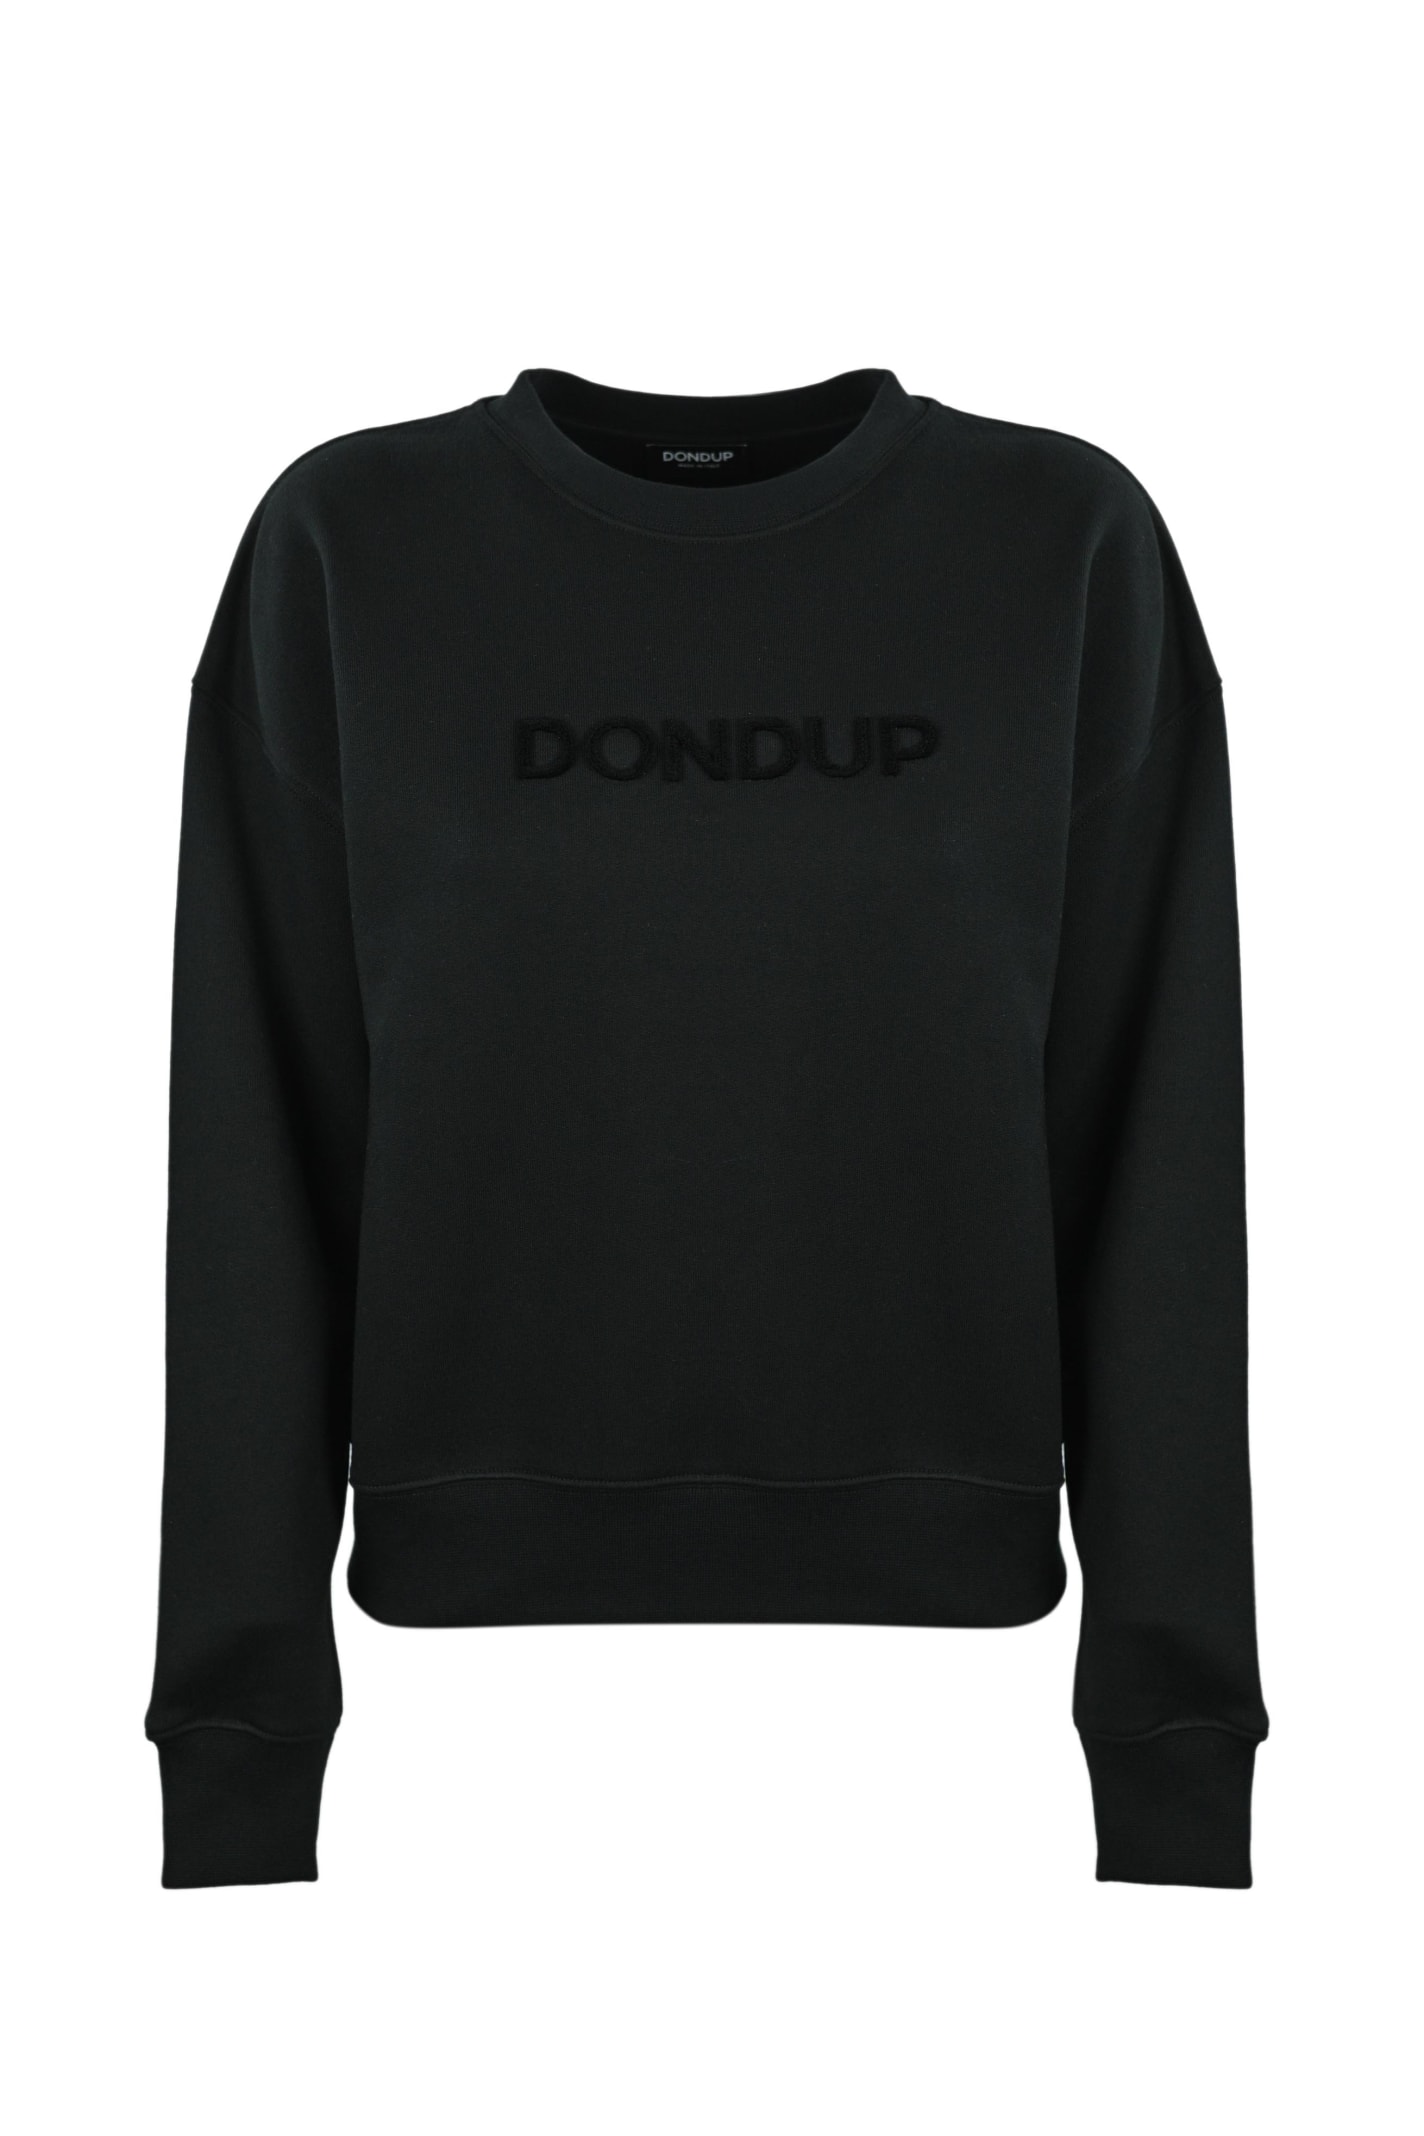 Dondup Regular Crewneck Sweatshirt In Cotton